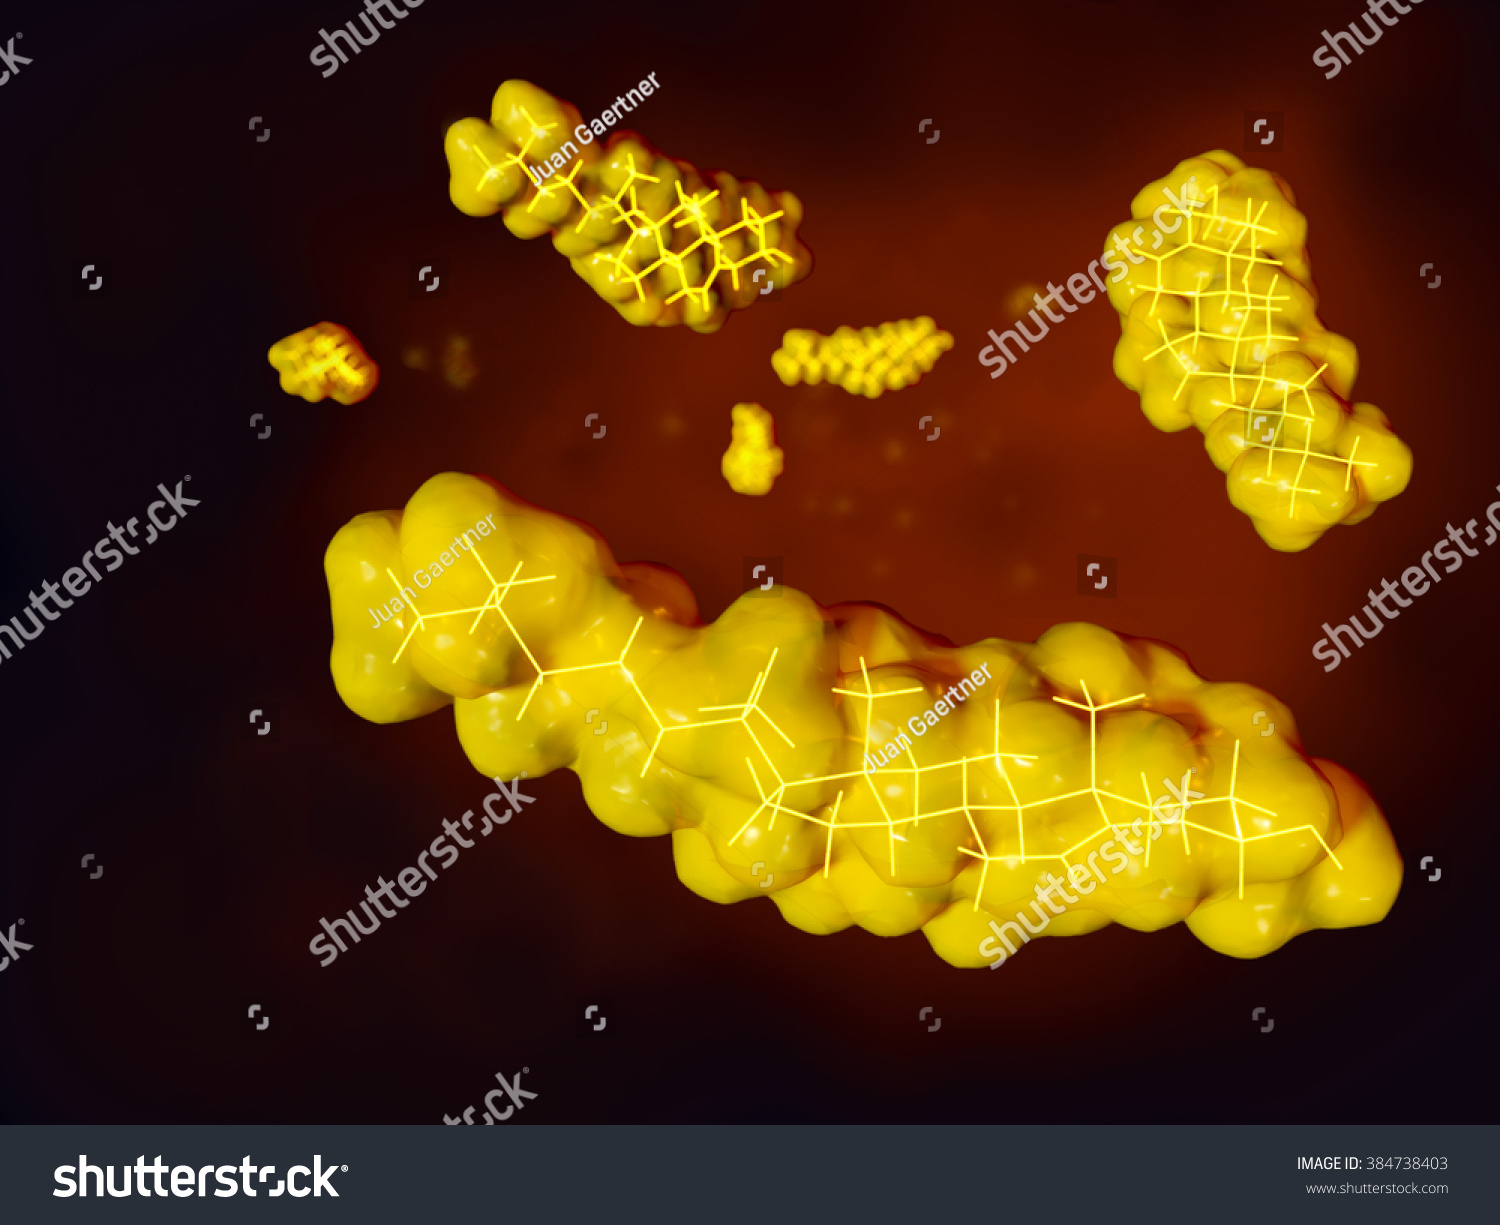 cholesterol-molecules-cholesterol-structural-component-all-ilustra-es